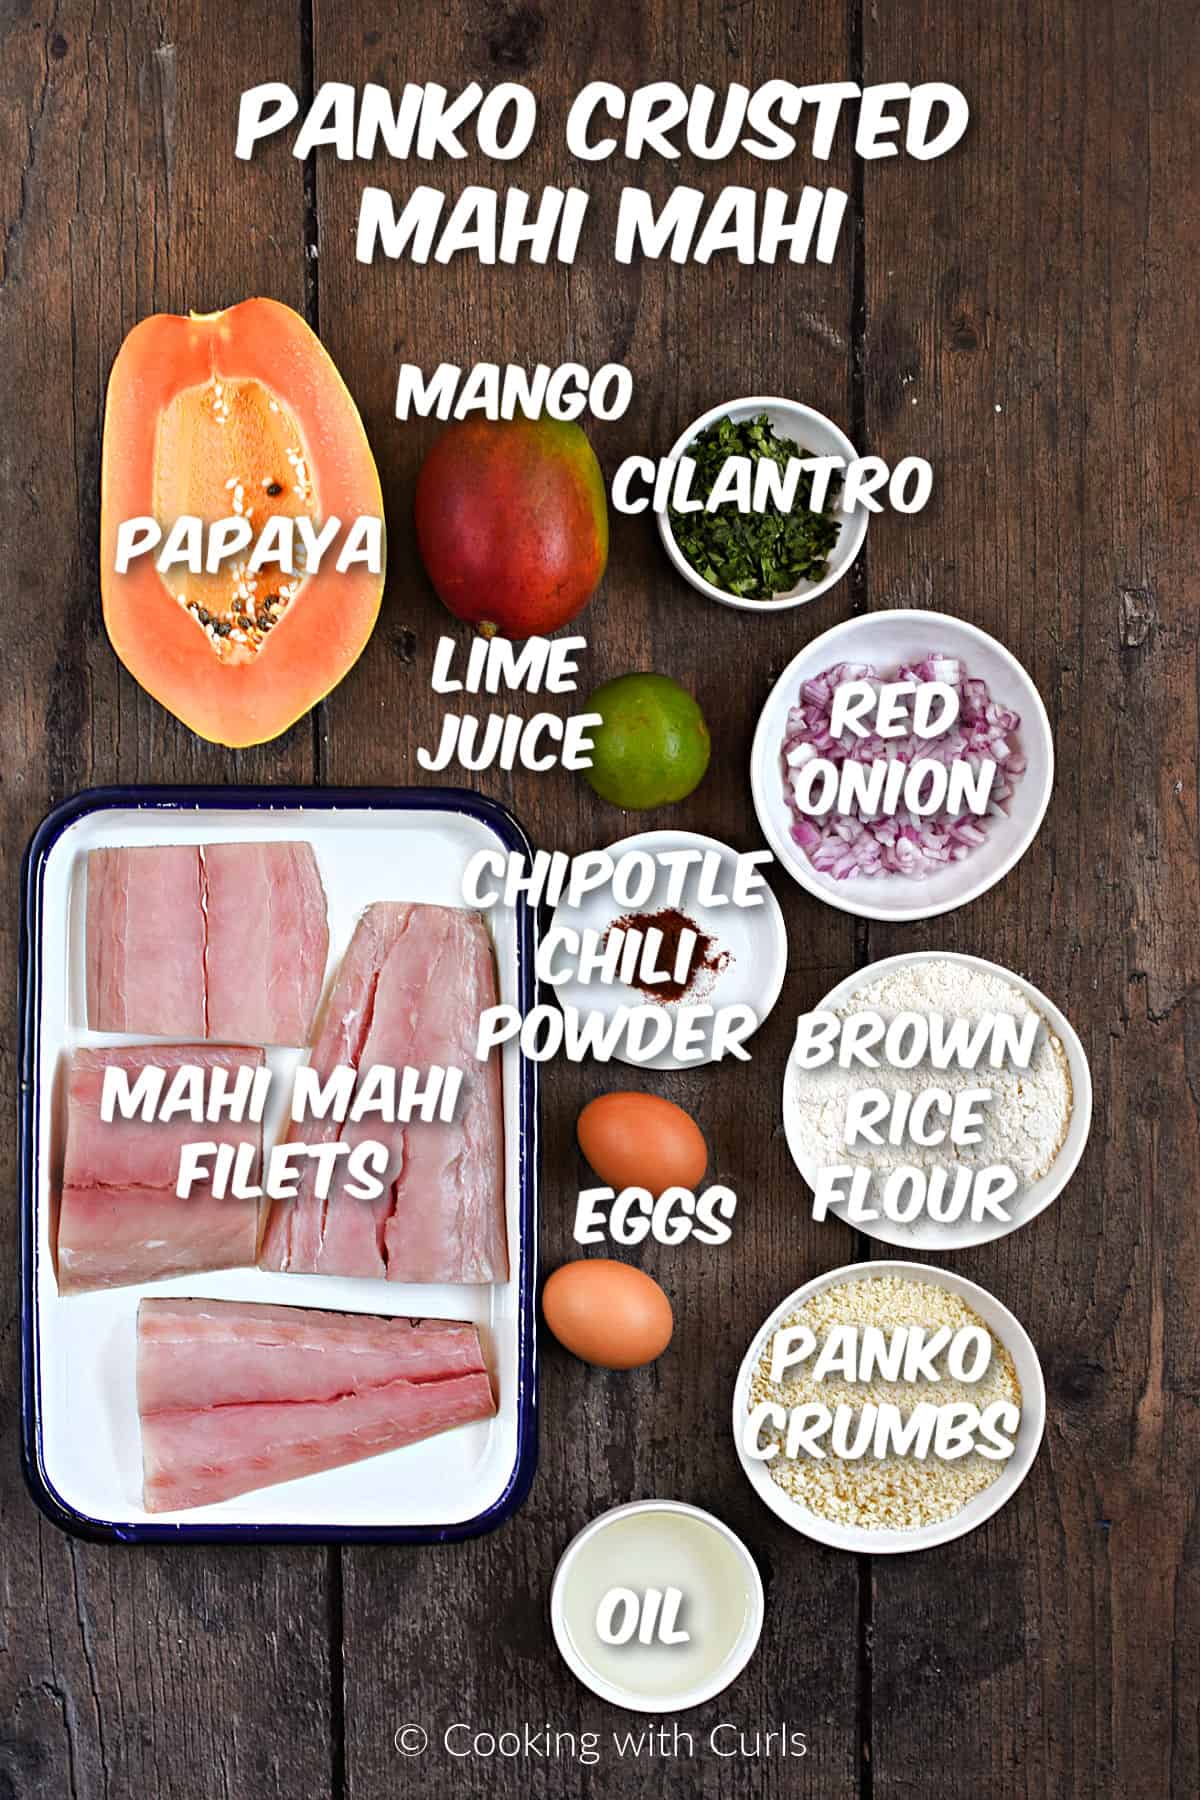 Ingredients to make panko crusted mahi mahi with papaya mango salsa. 